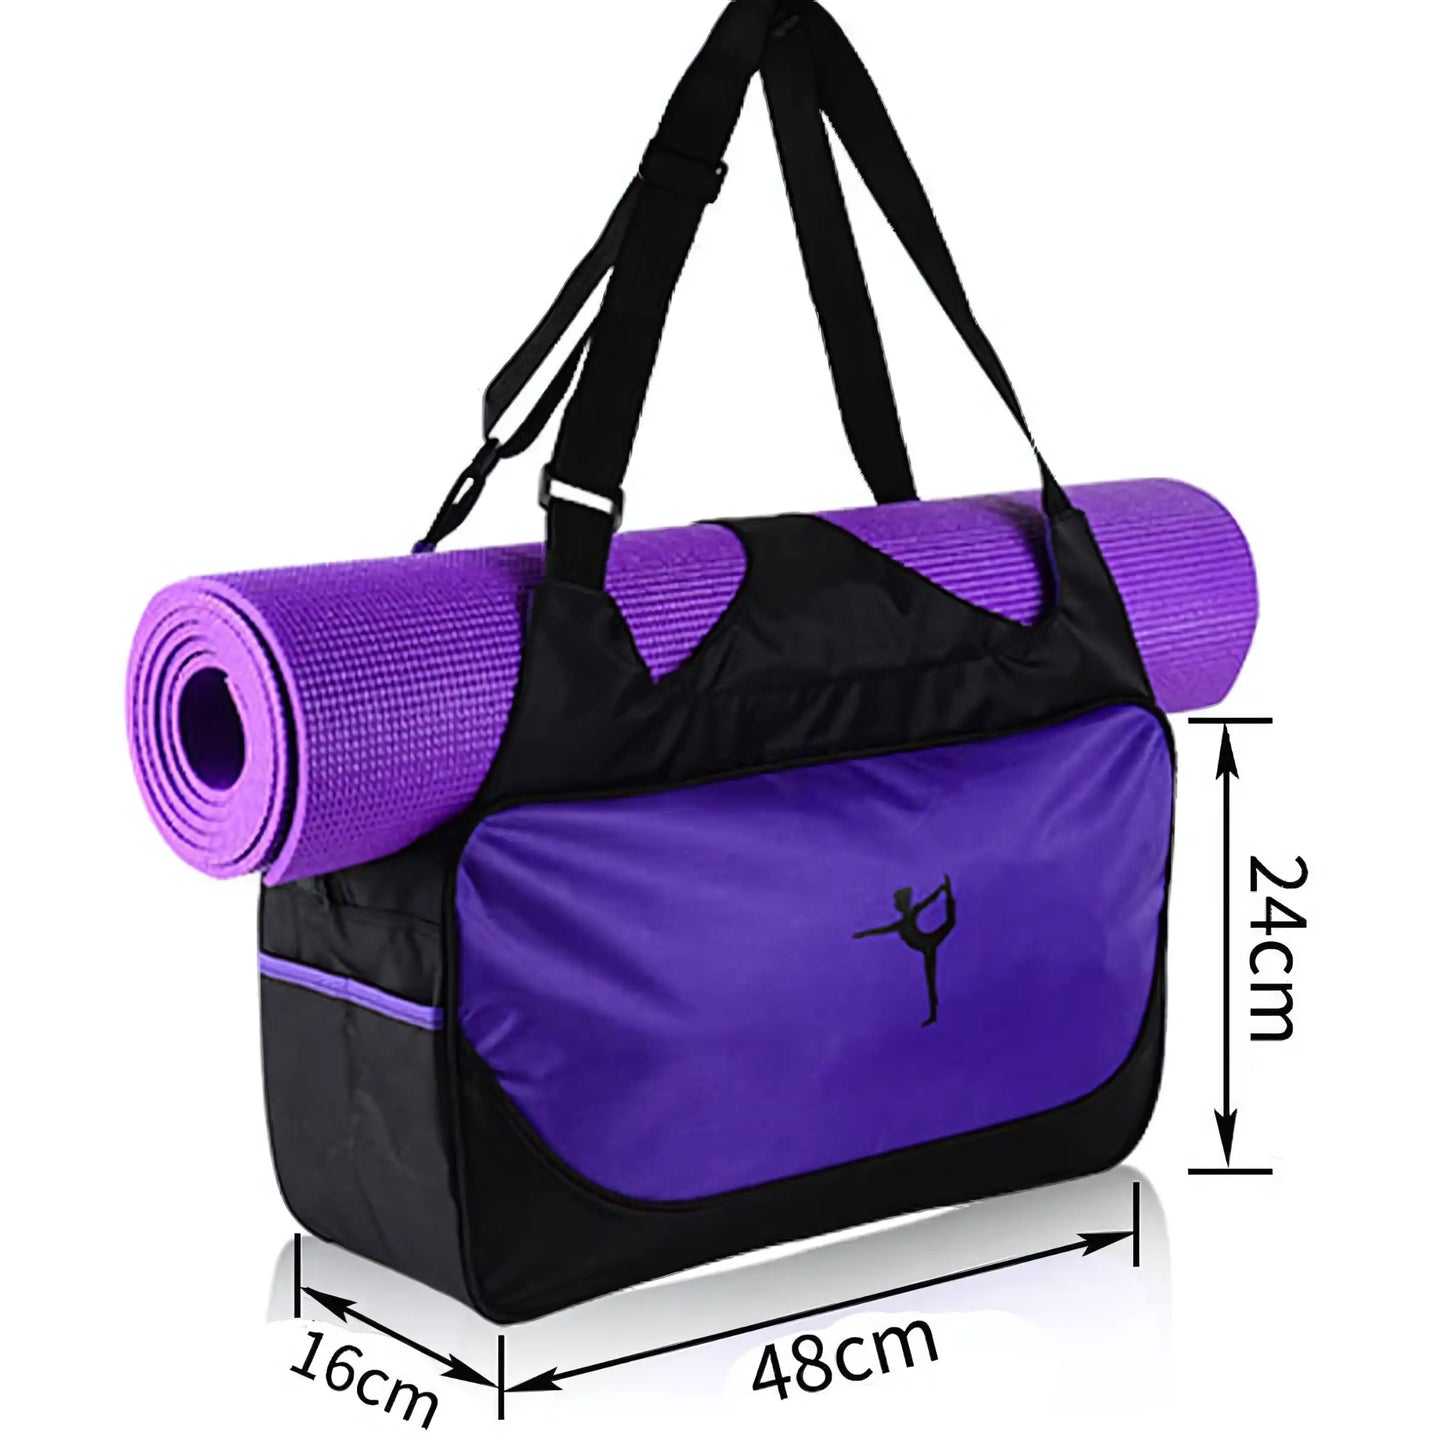 WATERPROOF YOGA MAT CARRIER BACKPACK - Yoga Bag